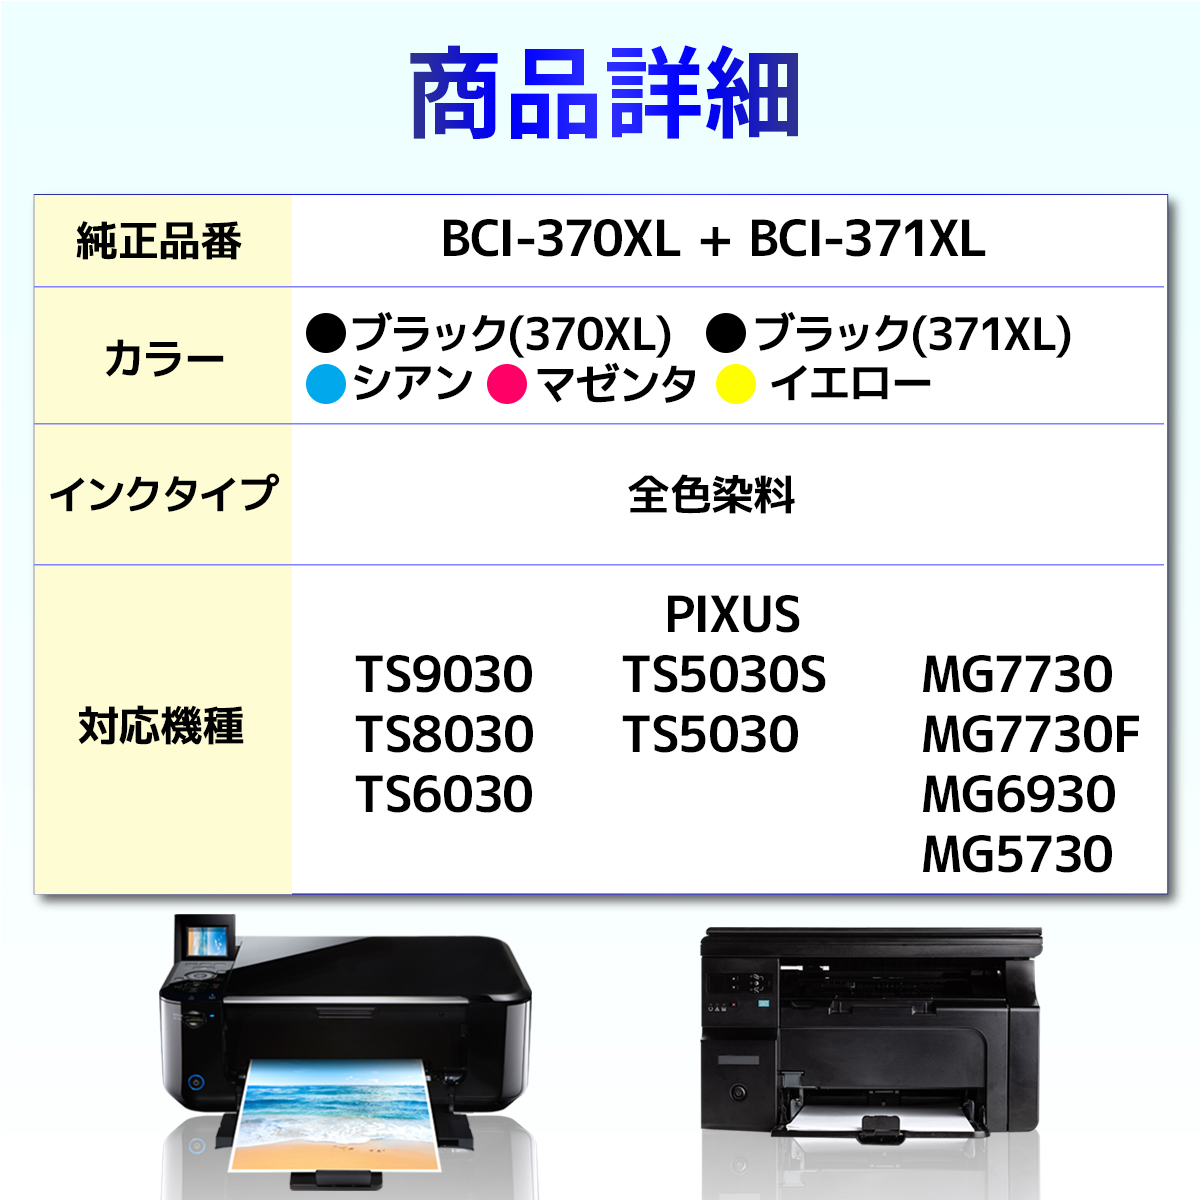 BCI-371XL+370XL/5MP 互換インクカートリッジ TS9030 TS8030 TS6030